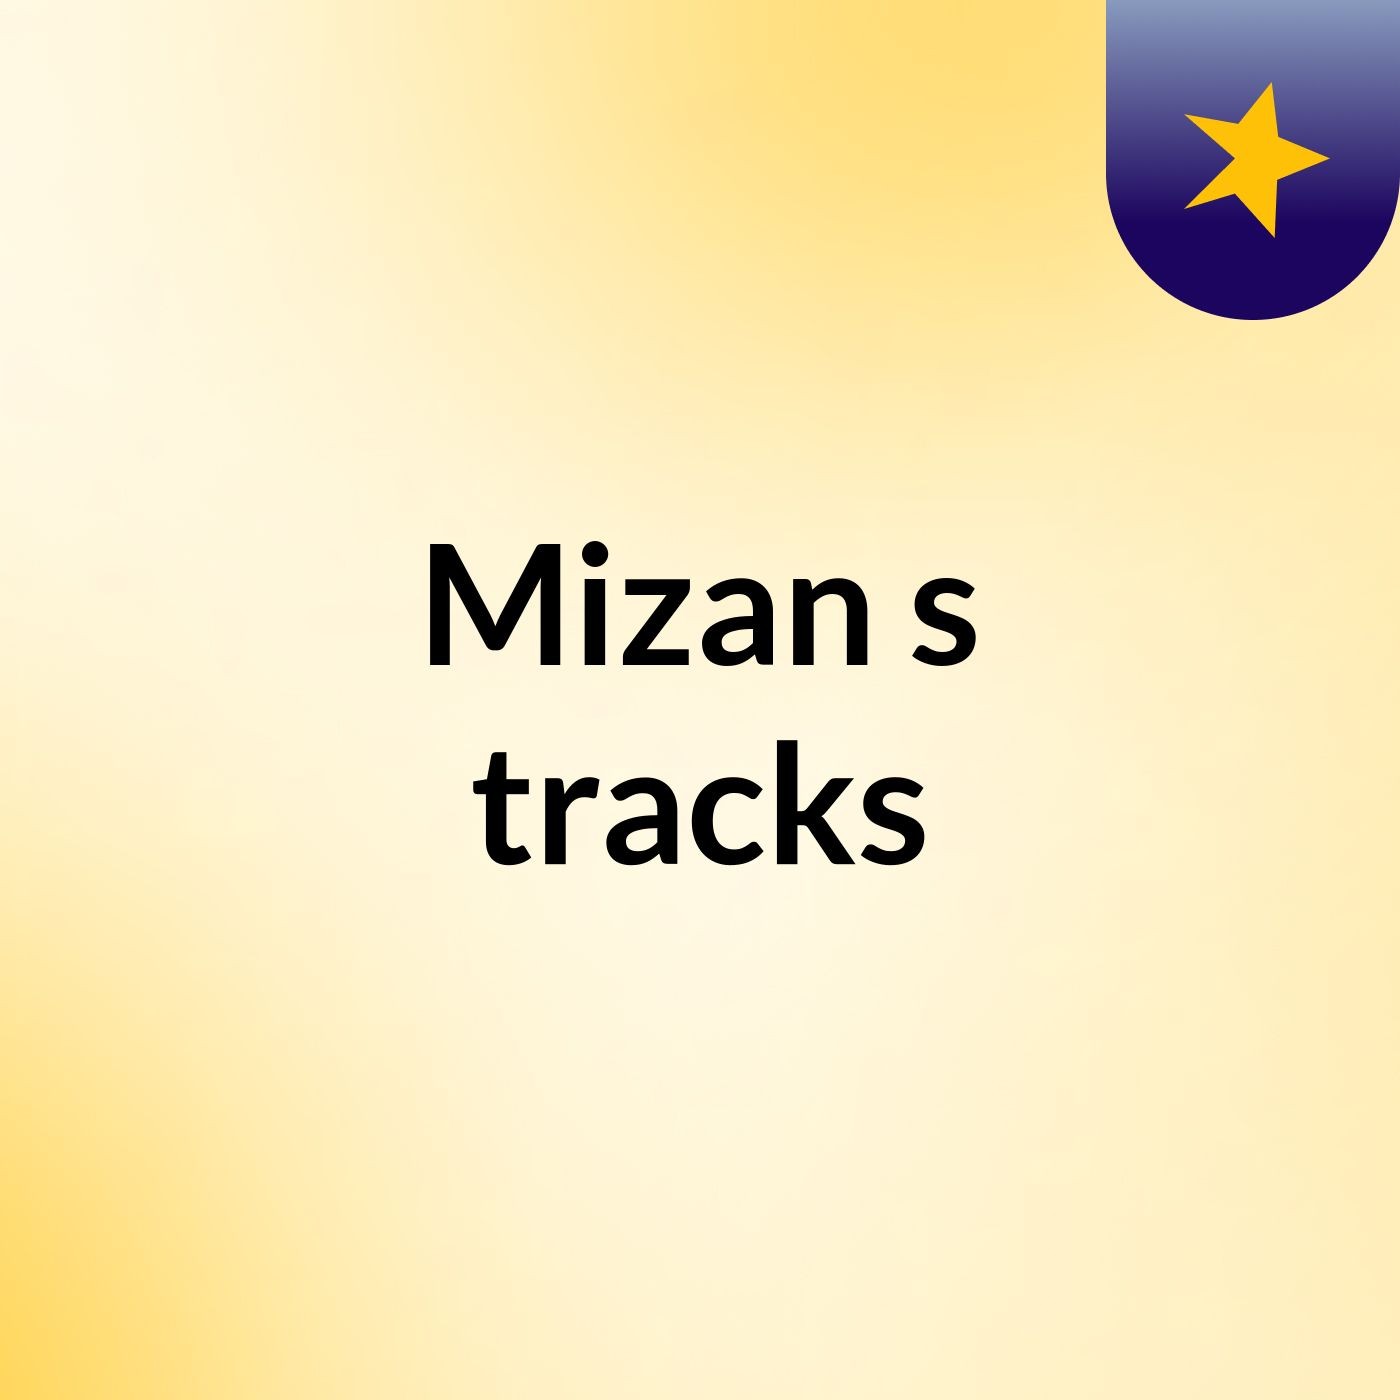 Mizan's tracks